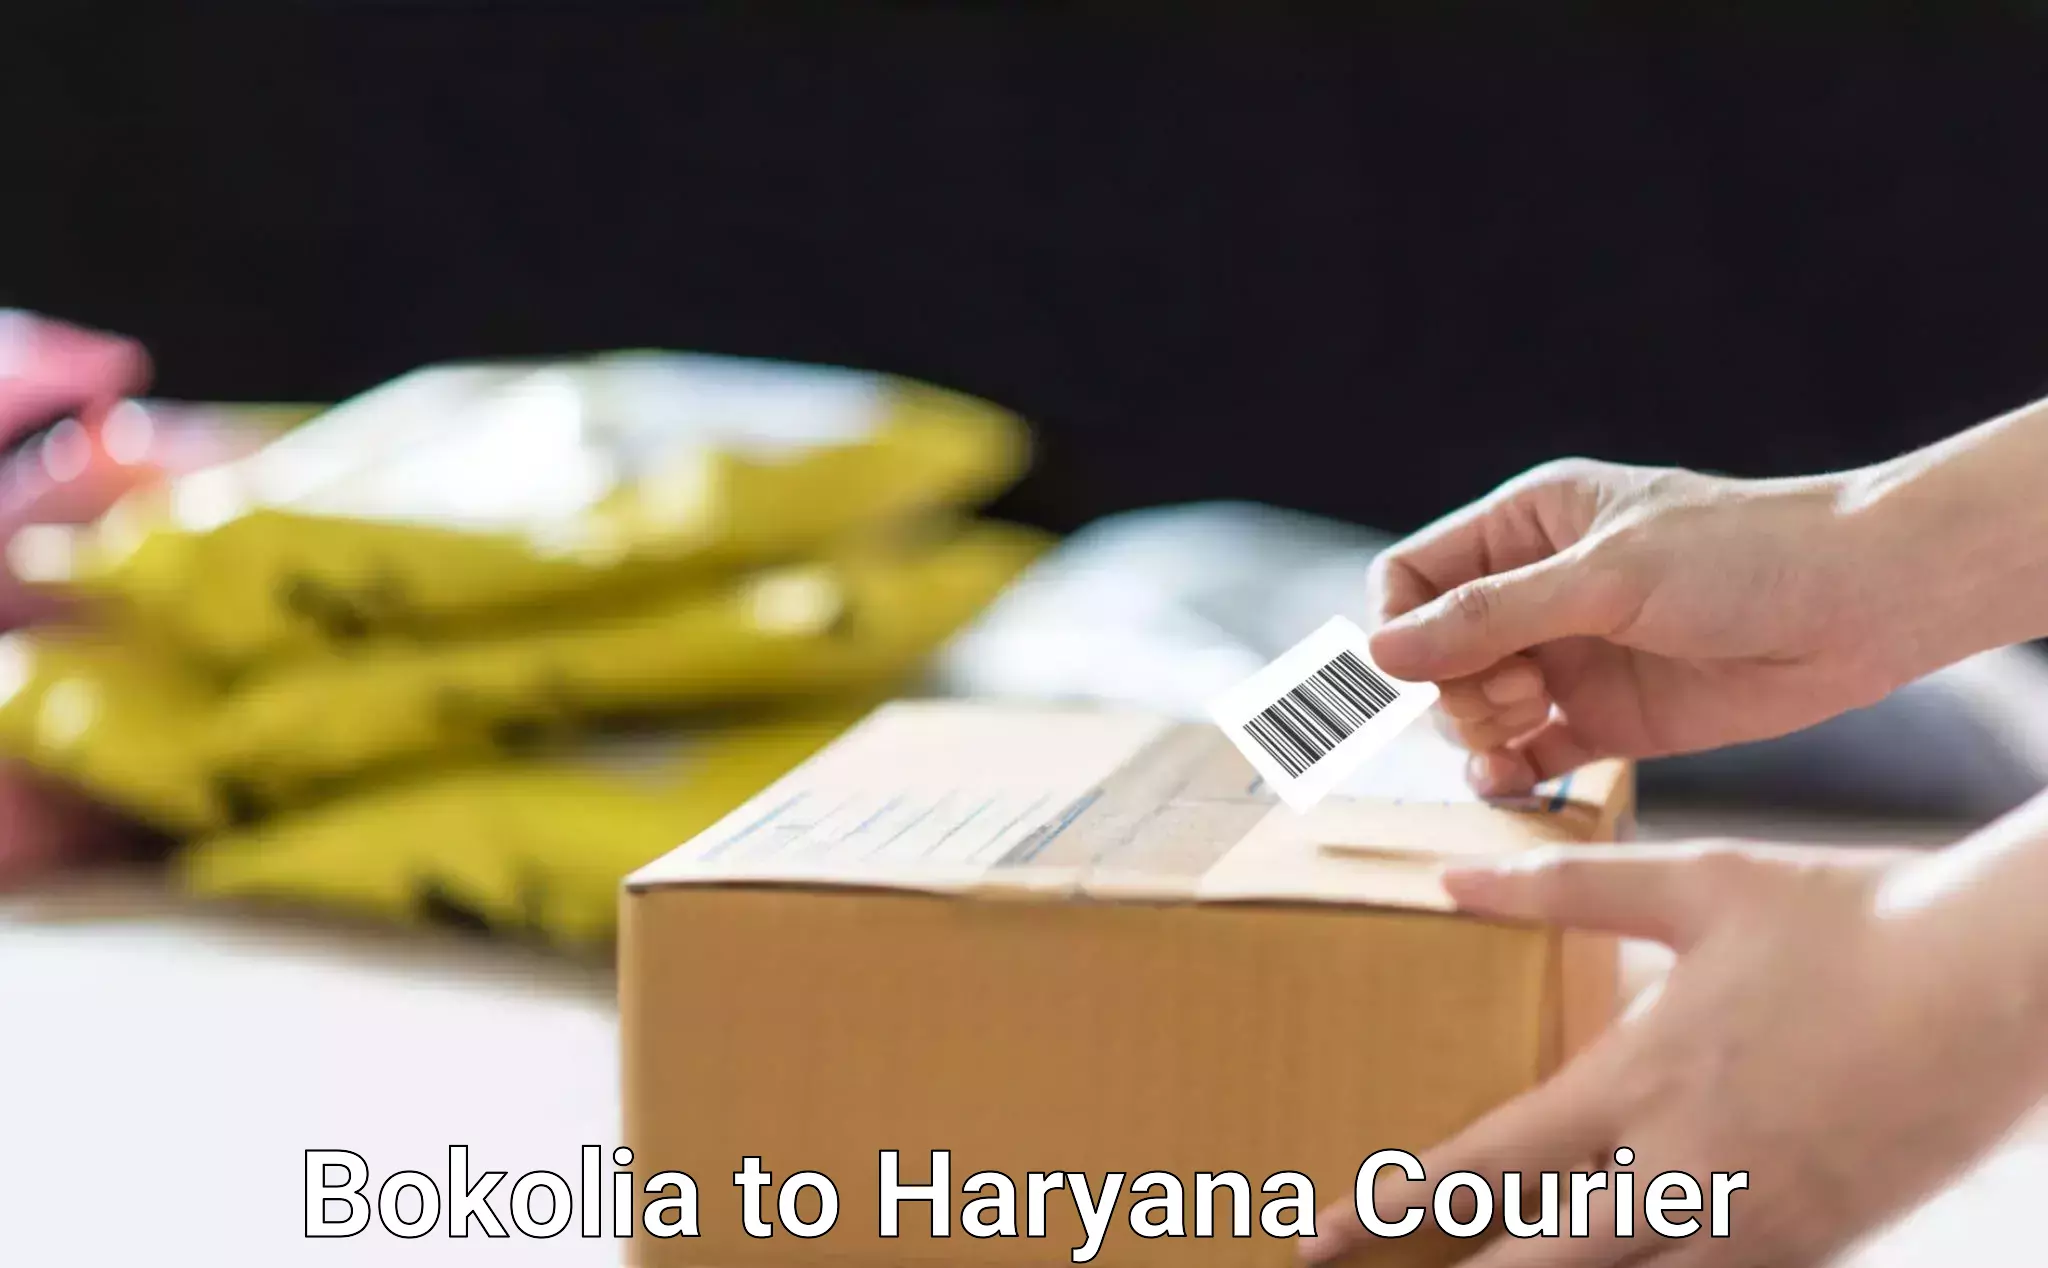 Courier service booking in Bokolia to Bilaspur Haryana